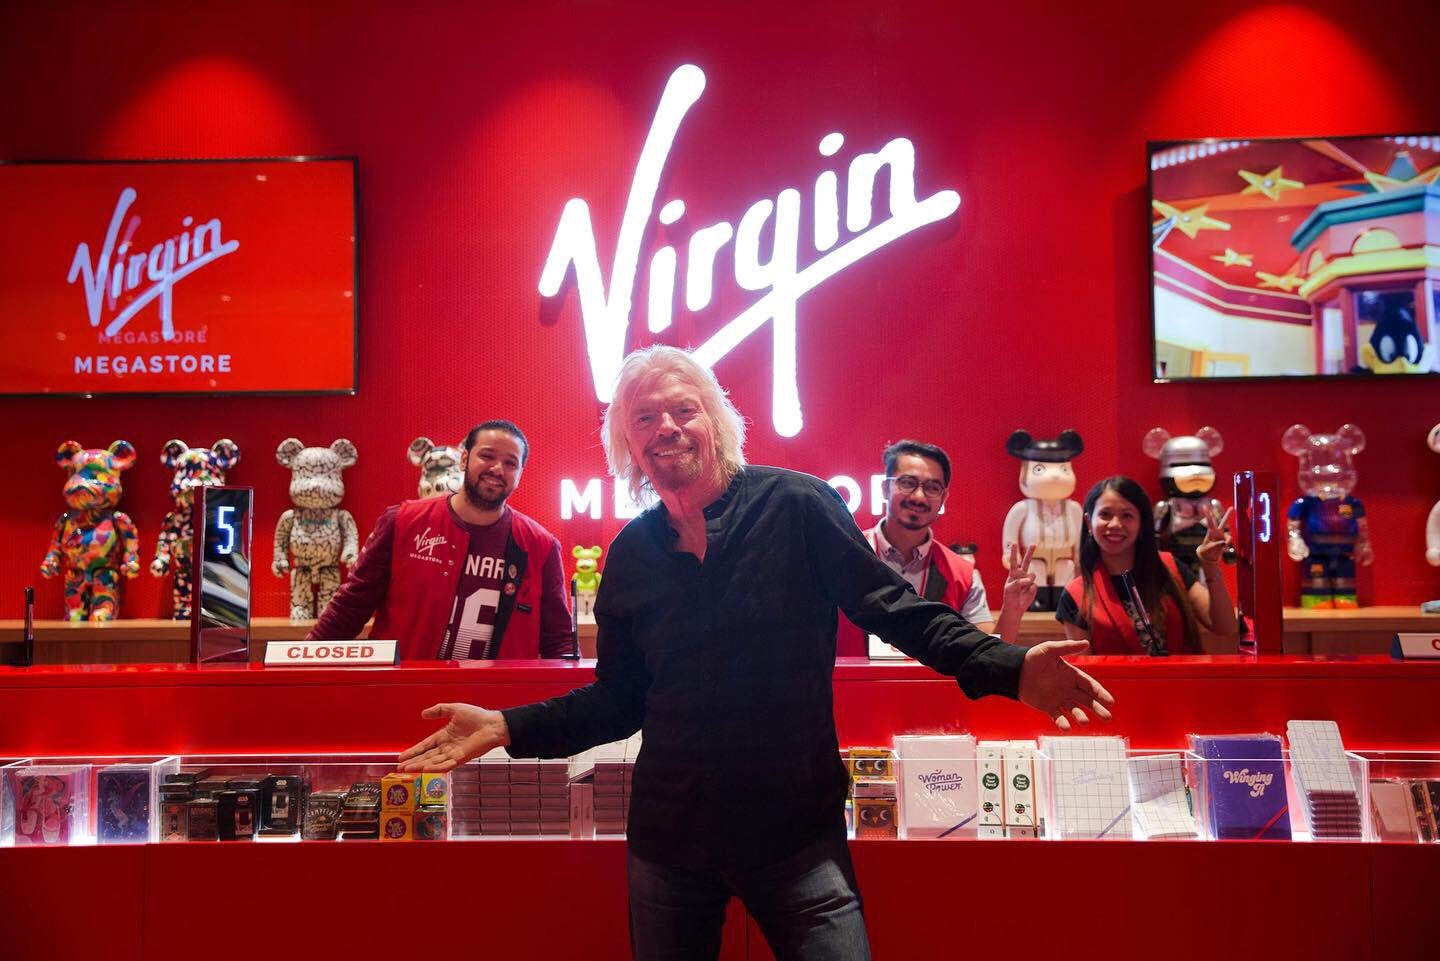 Sir Richard Branson - At Virgin Megastore Dubai